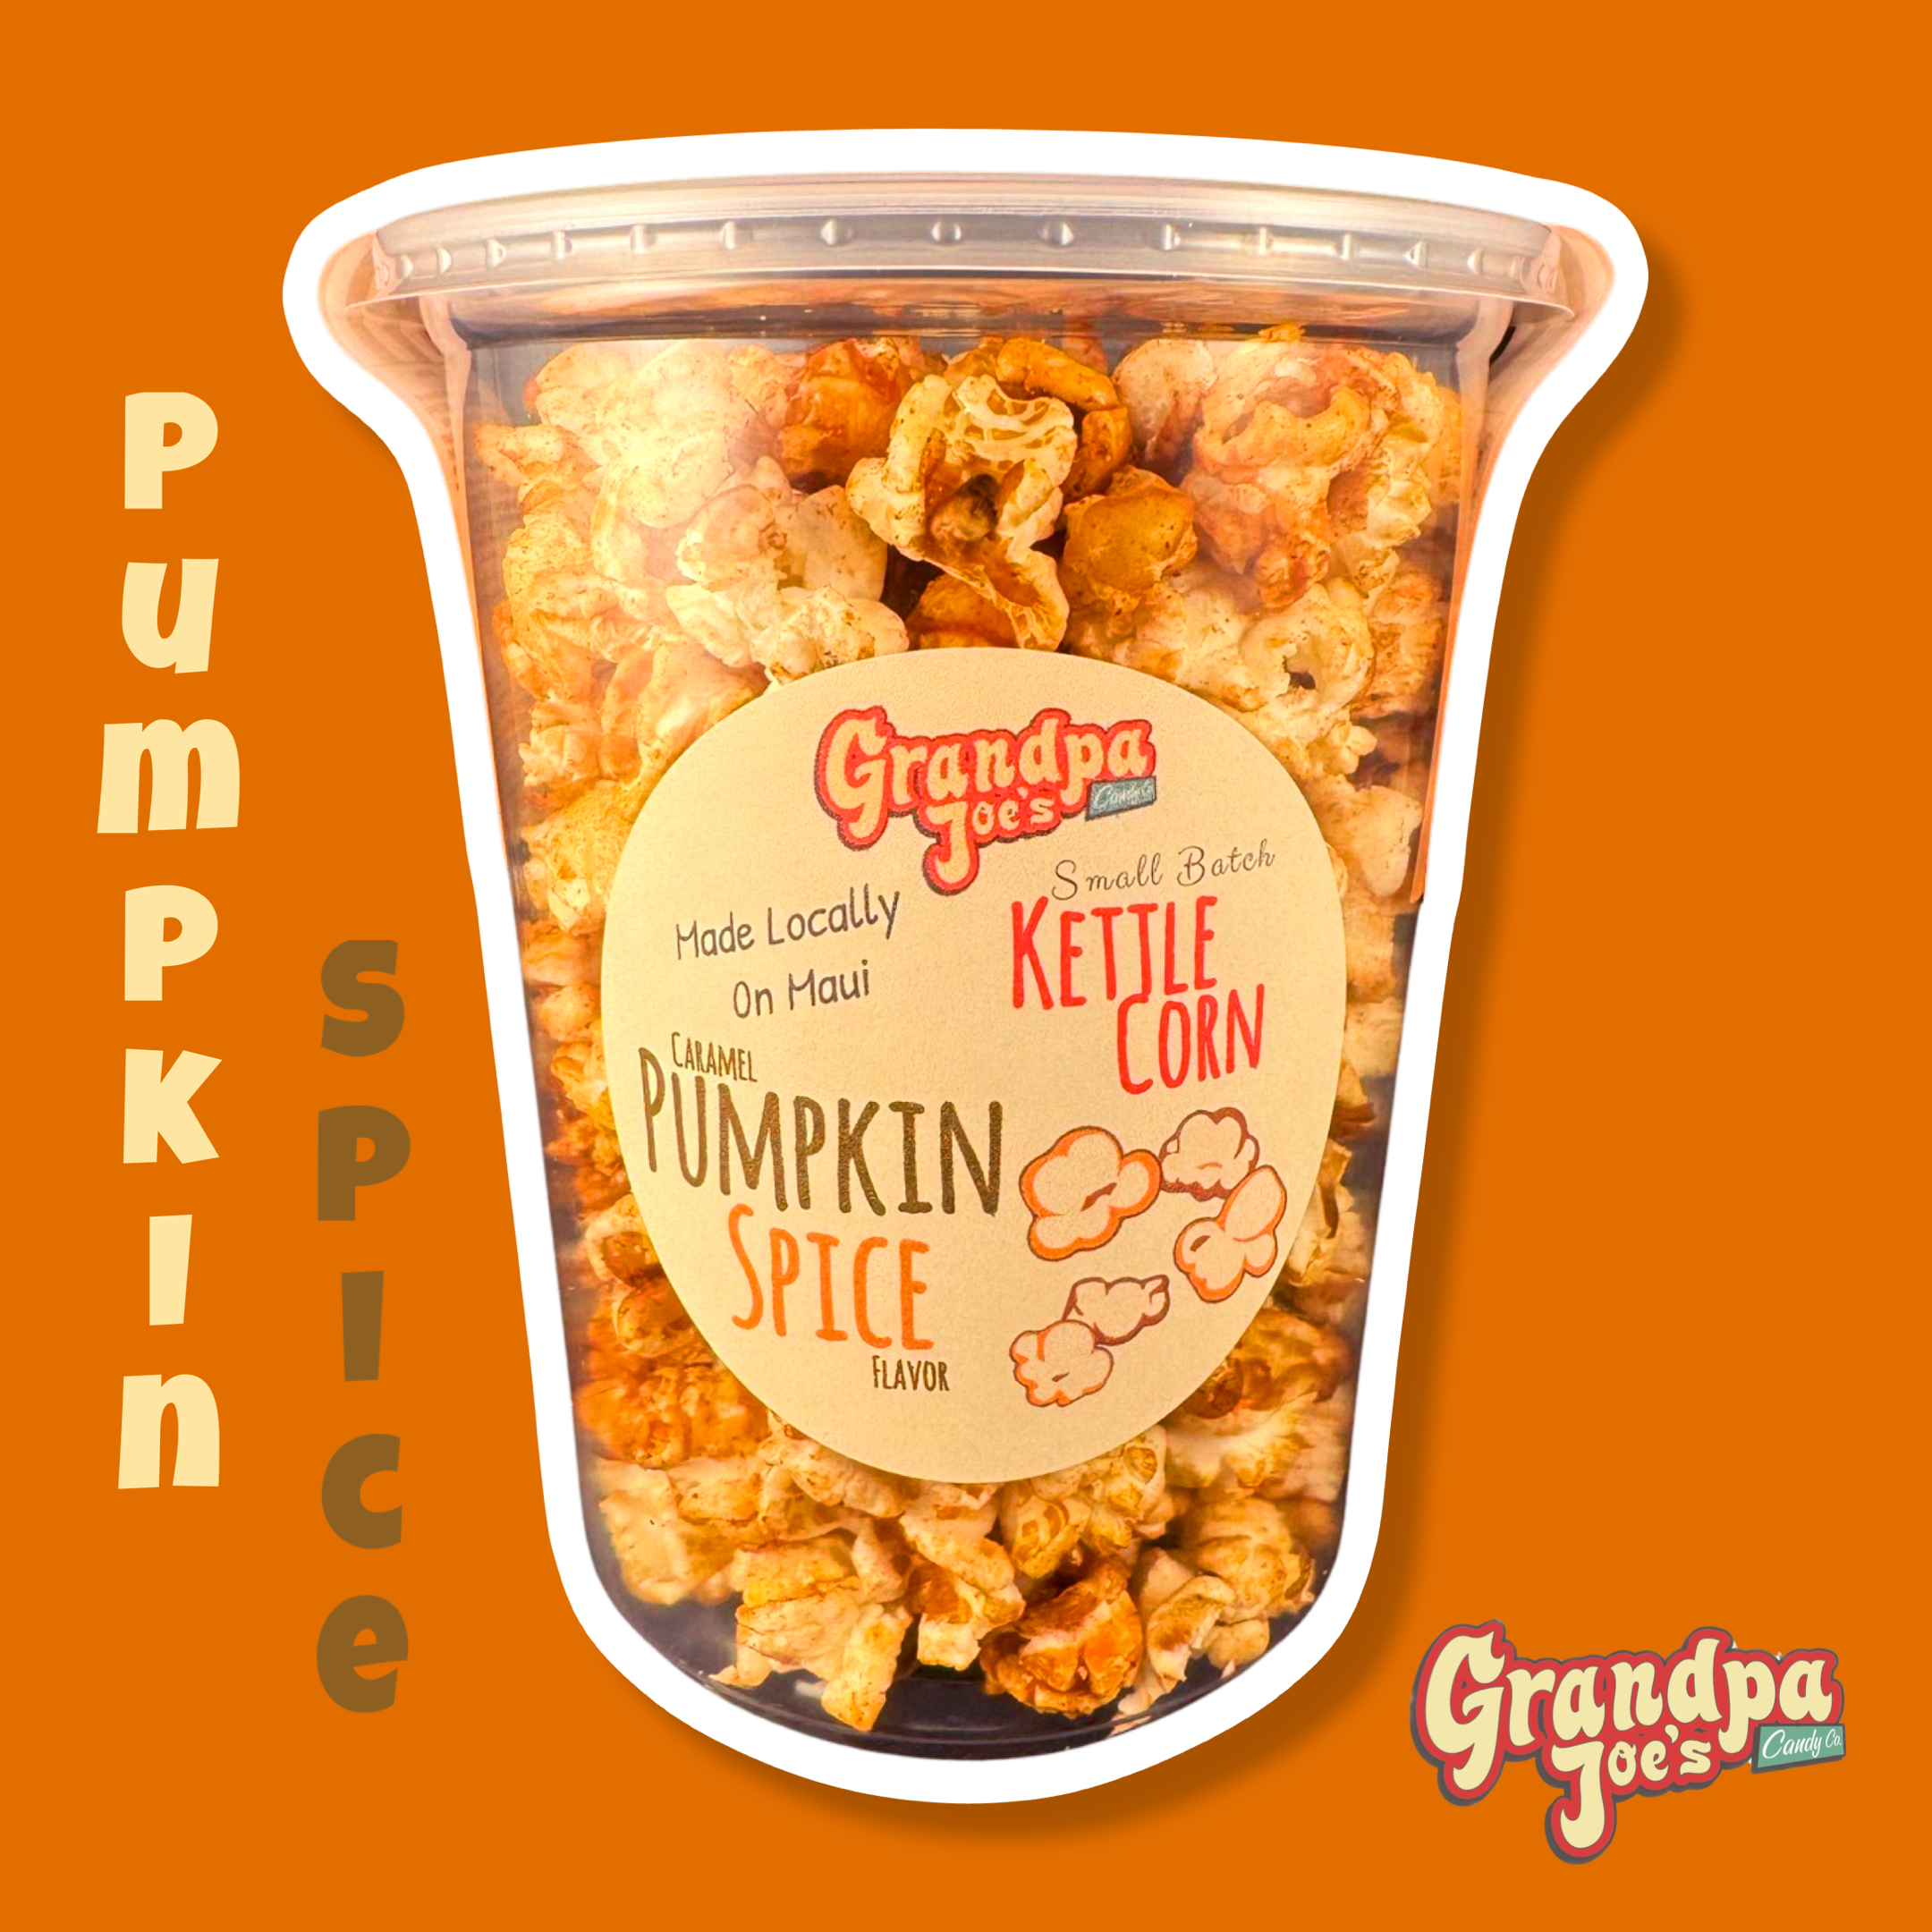 Caramel Pumpkin Spice Kettle Corn